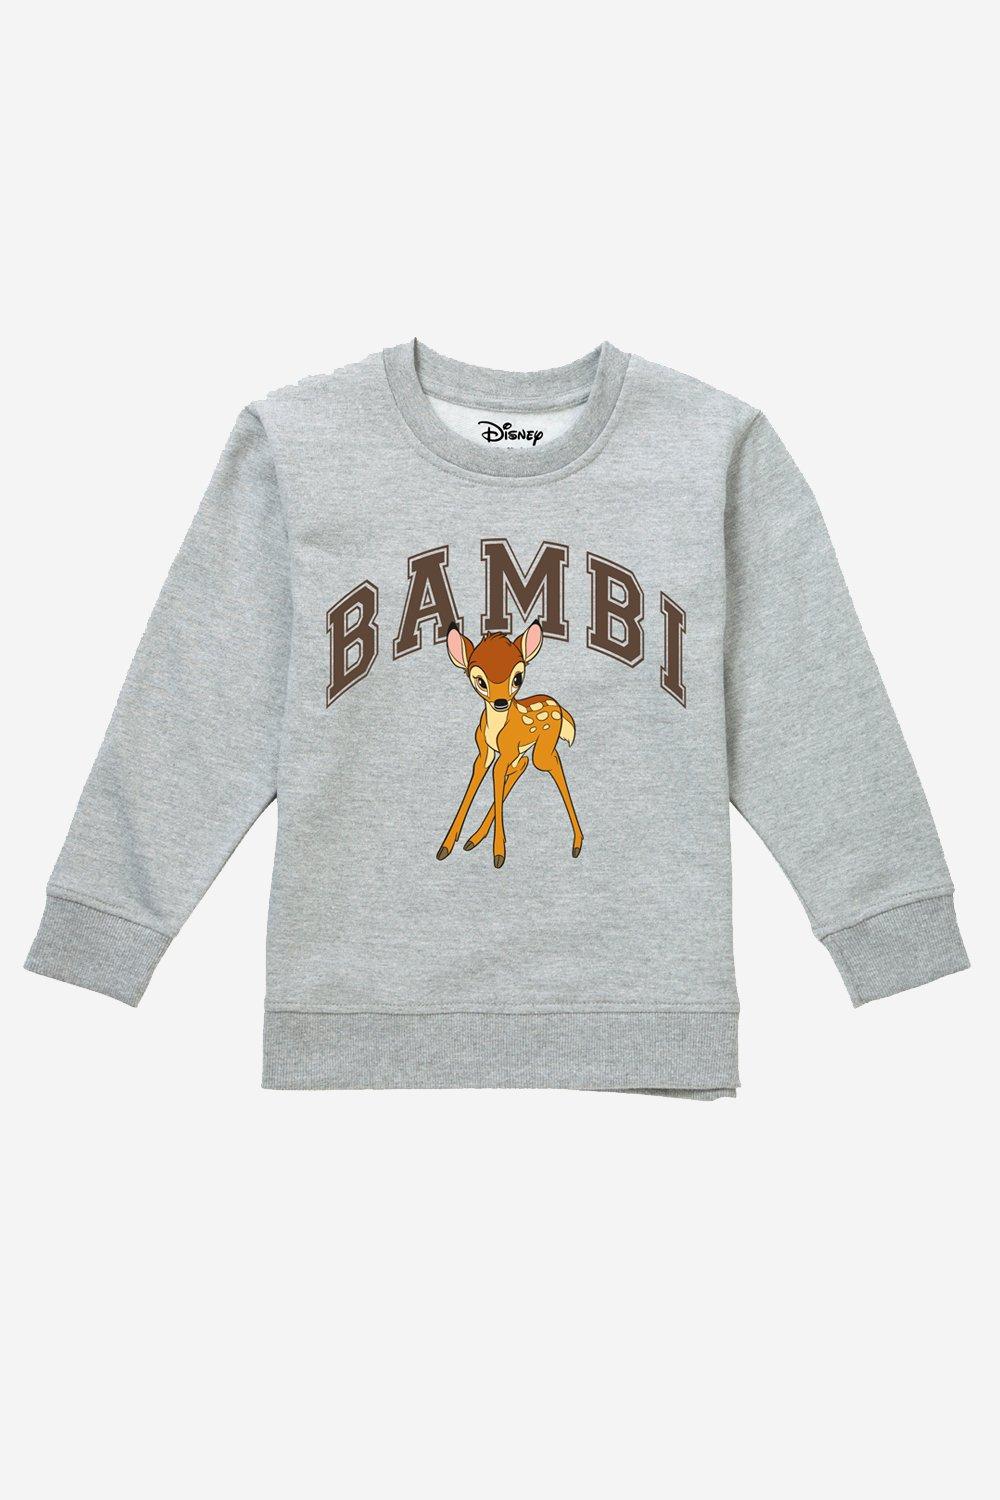 Bambi Collegiate Crew Sweatshirt